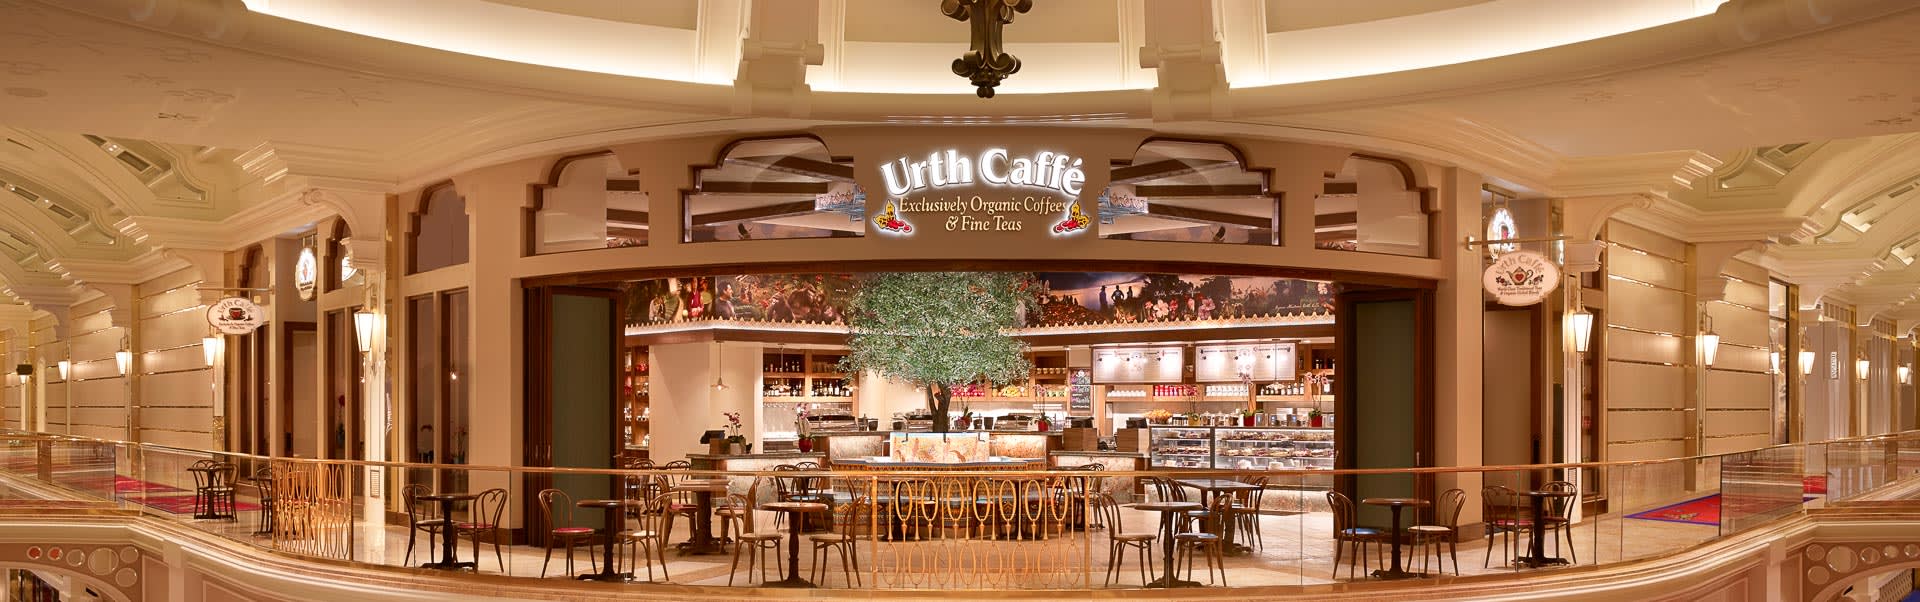 Urth Caffé Coffee & Tea Shop  Wynn Las Vegas and Encore Resort